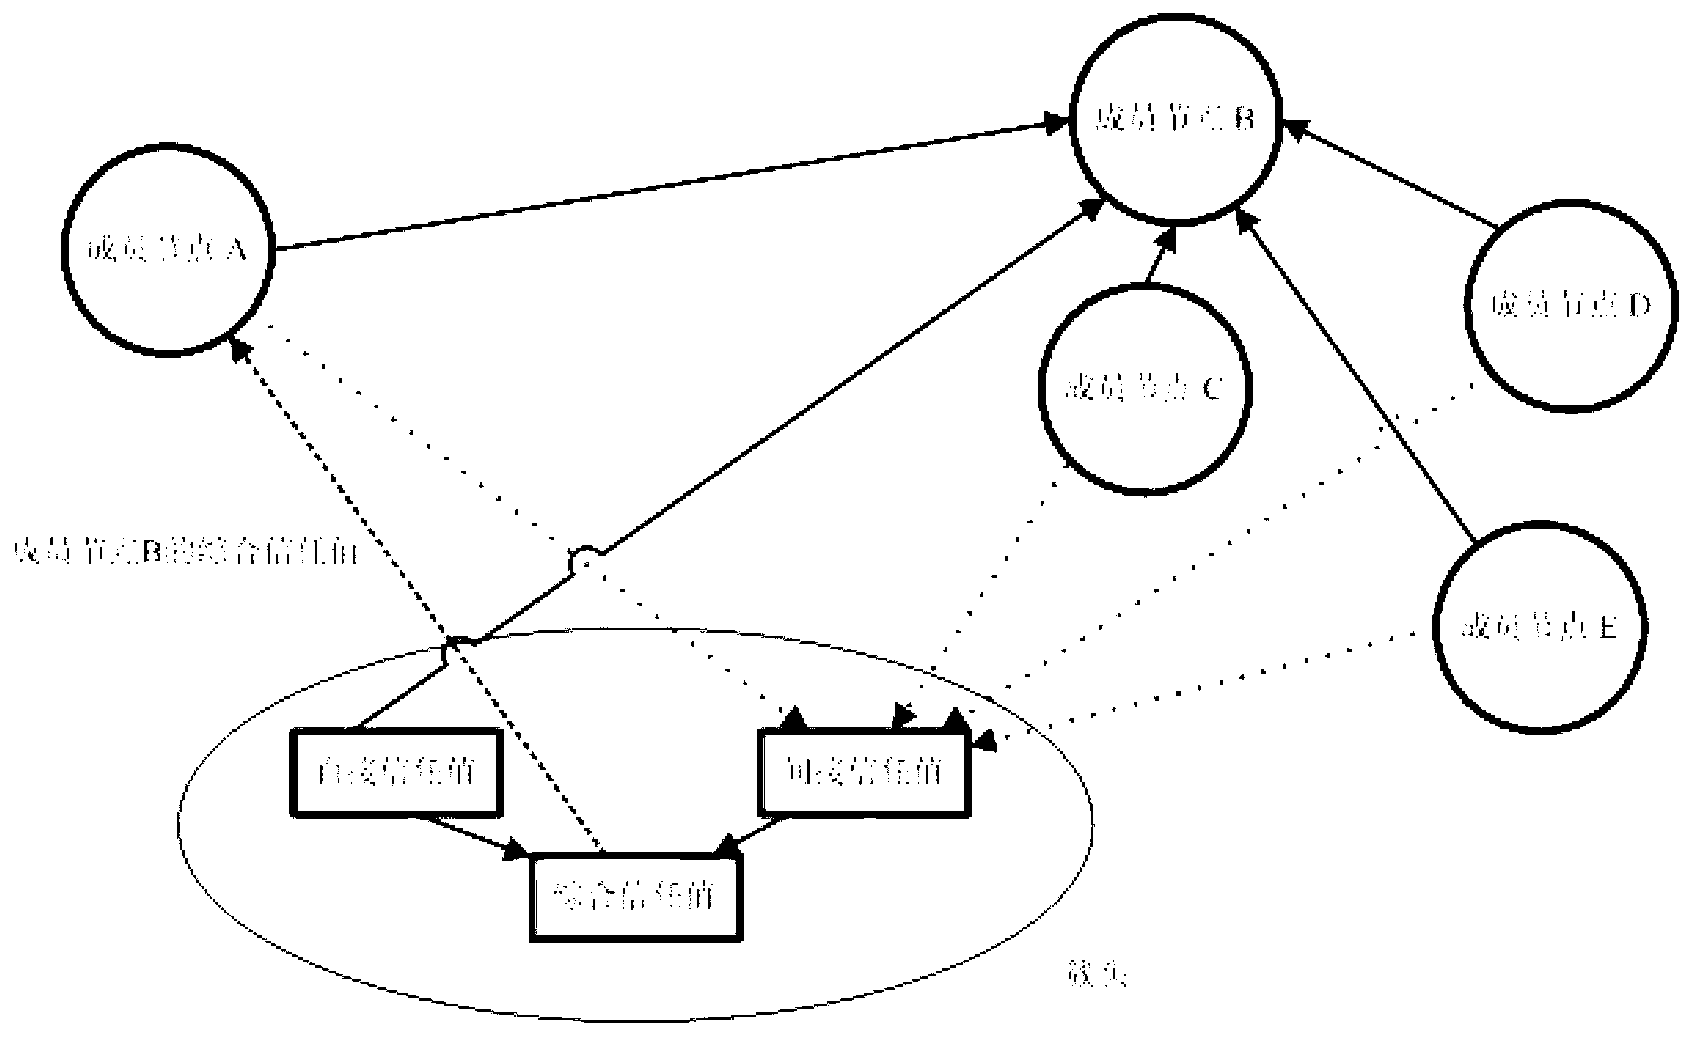 Cluster routing method based on multi-factor trust mechanism